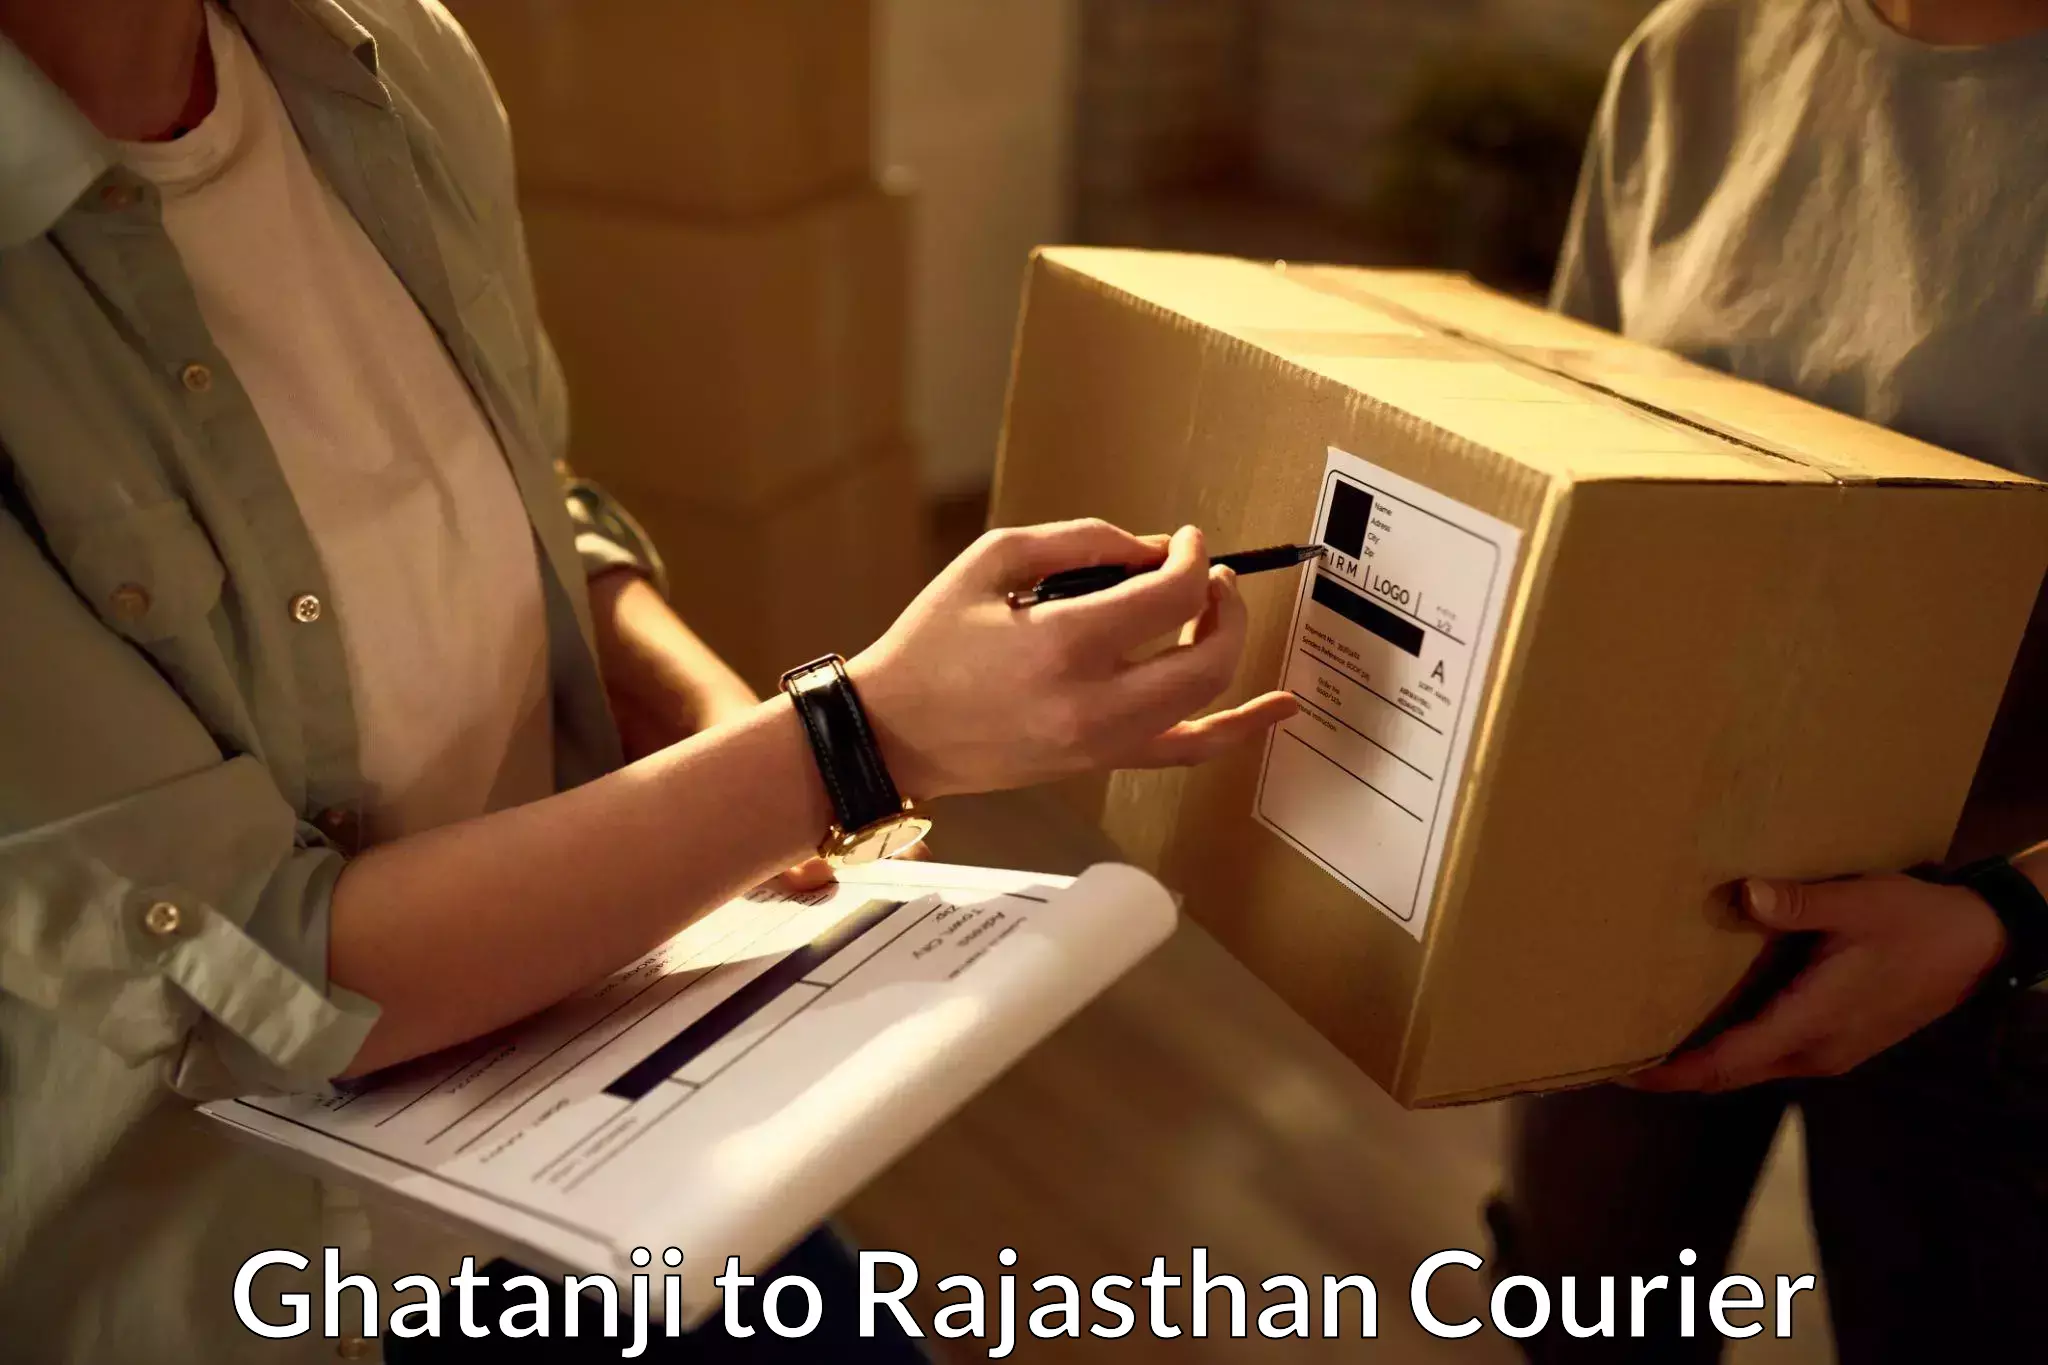 On-call courier service Ghatanji to Mathania